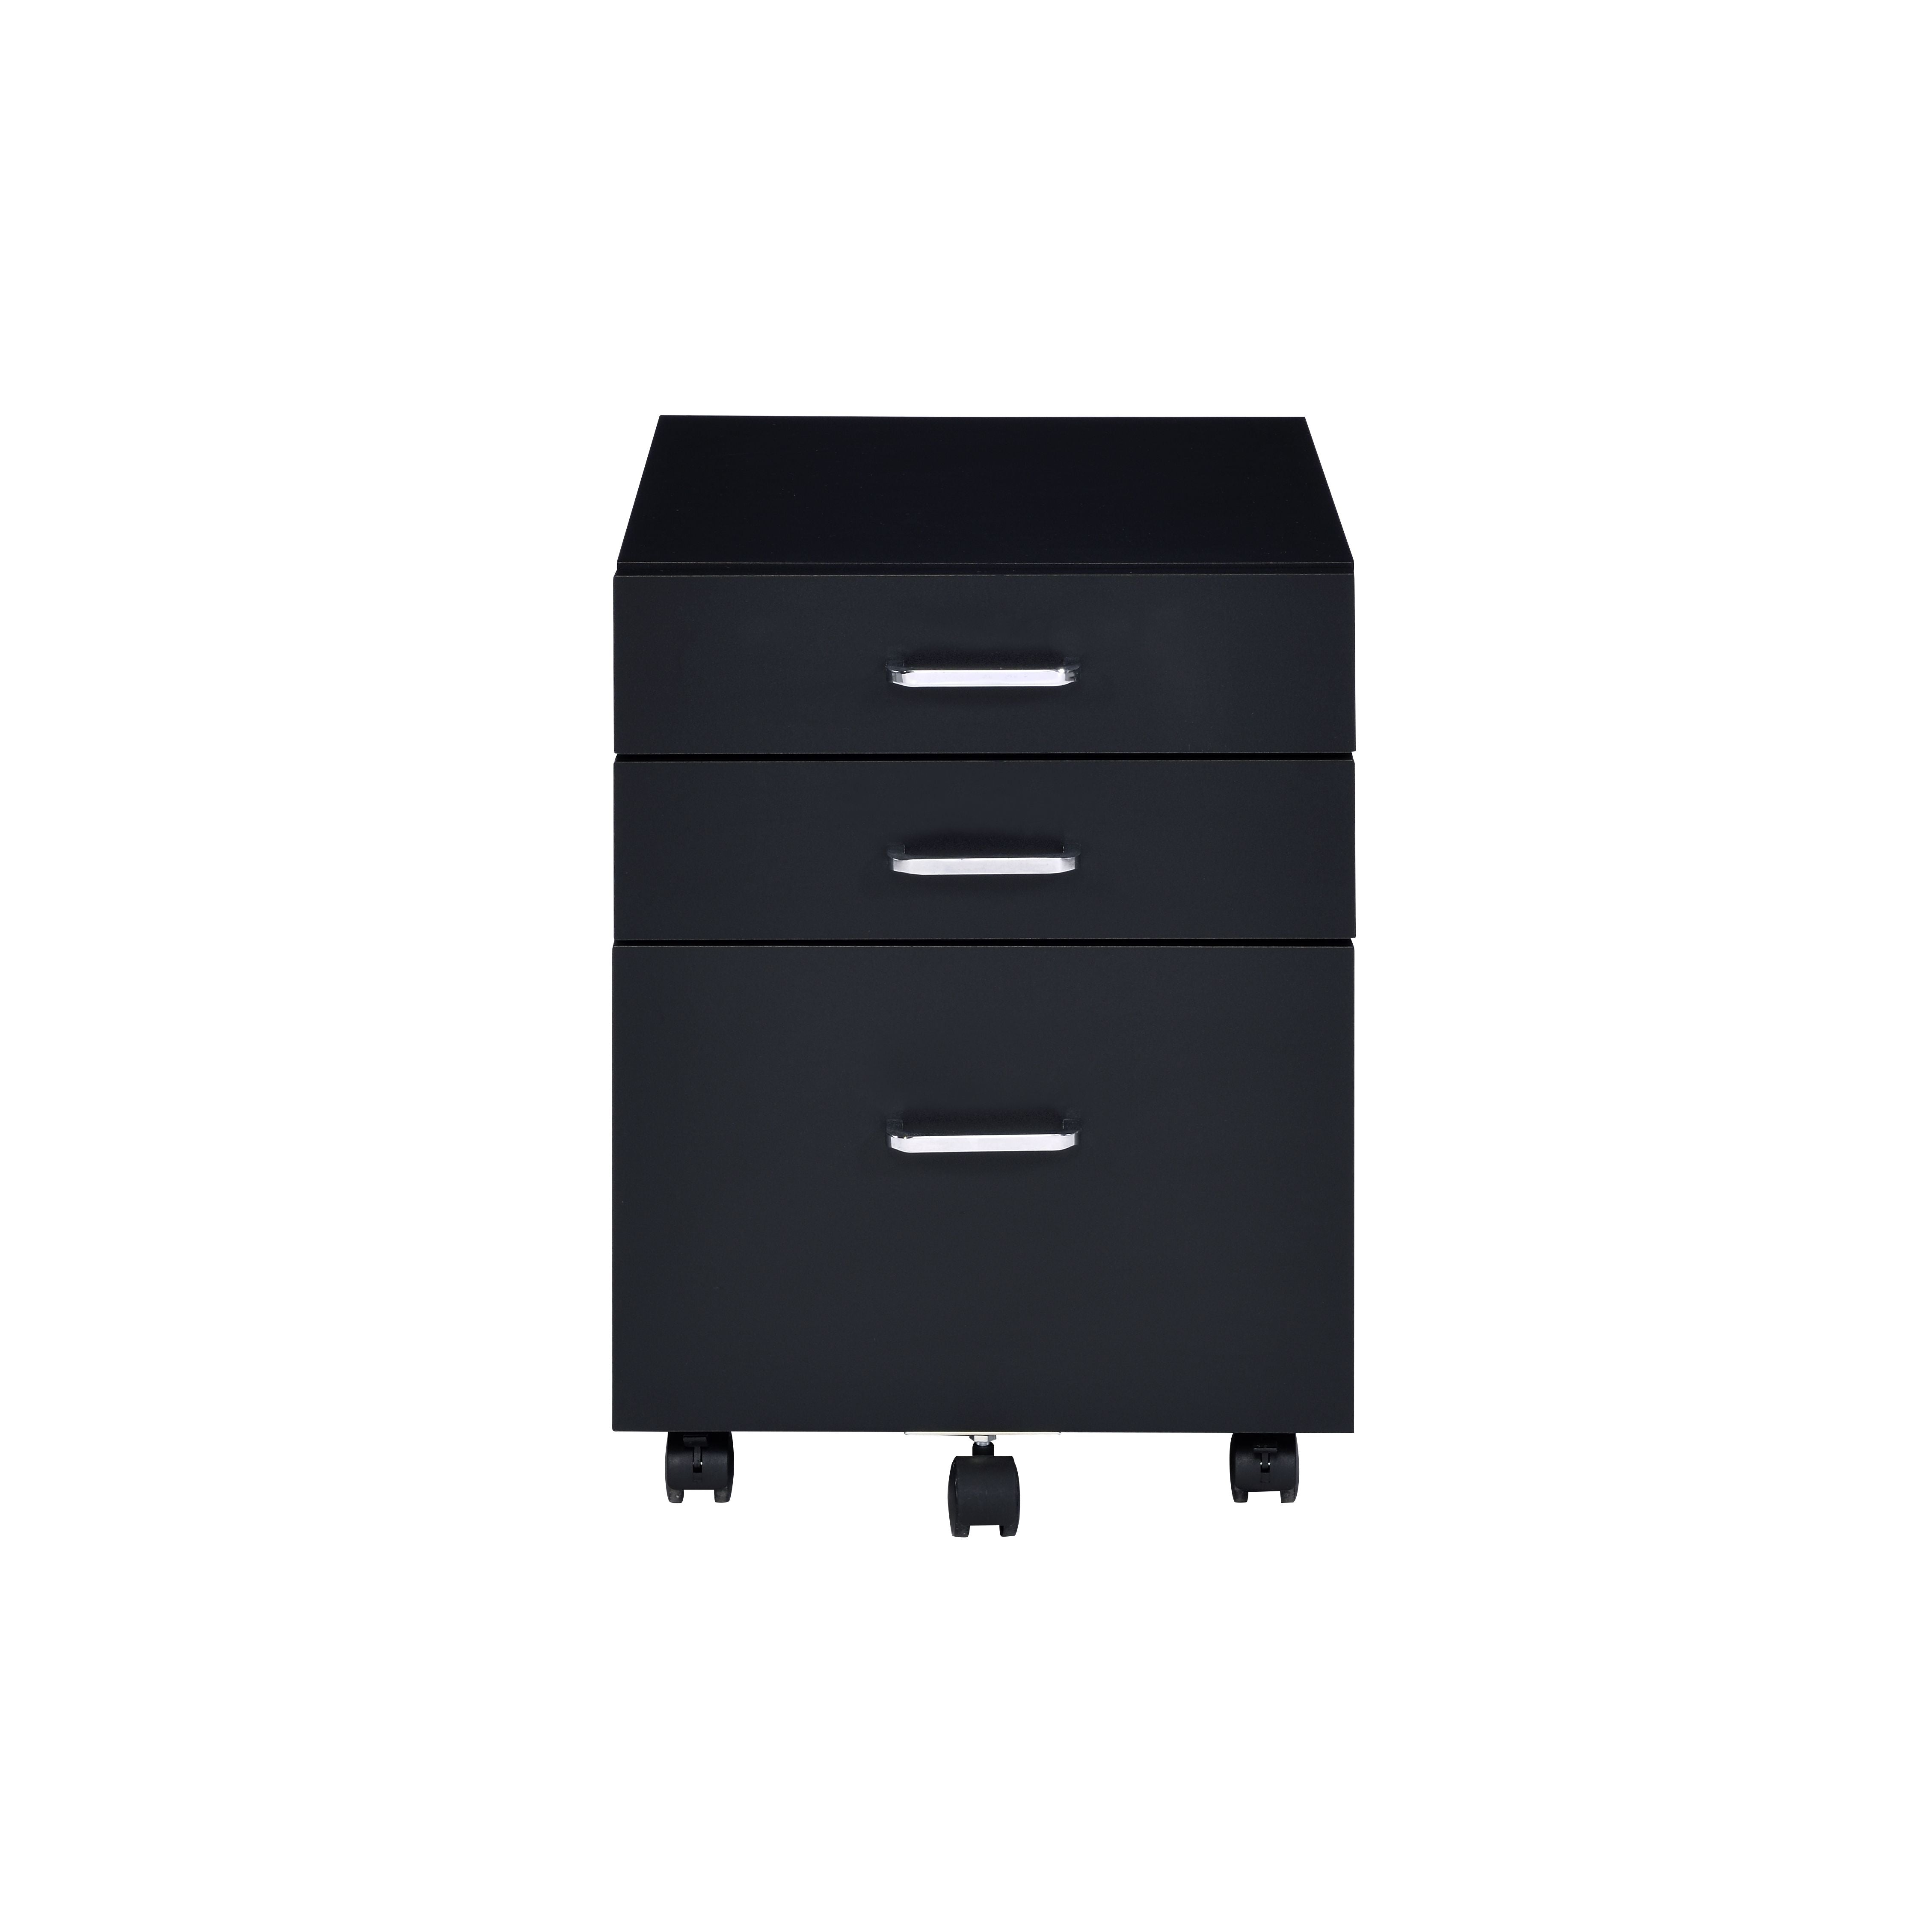 ACME Furniture Buffets & Cabinets - ACME Tennos Cabinet, Black & Chrome Finish